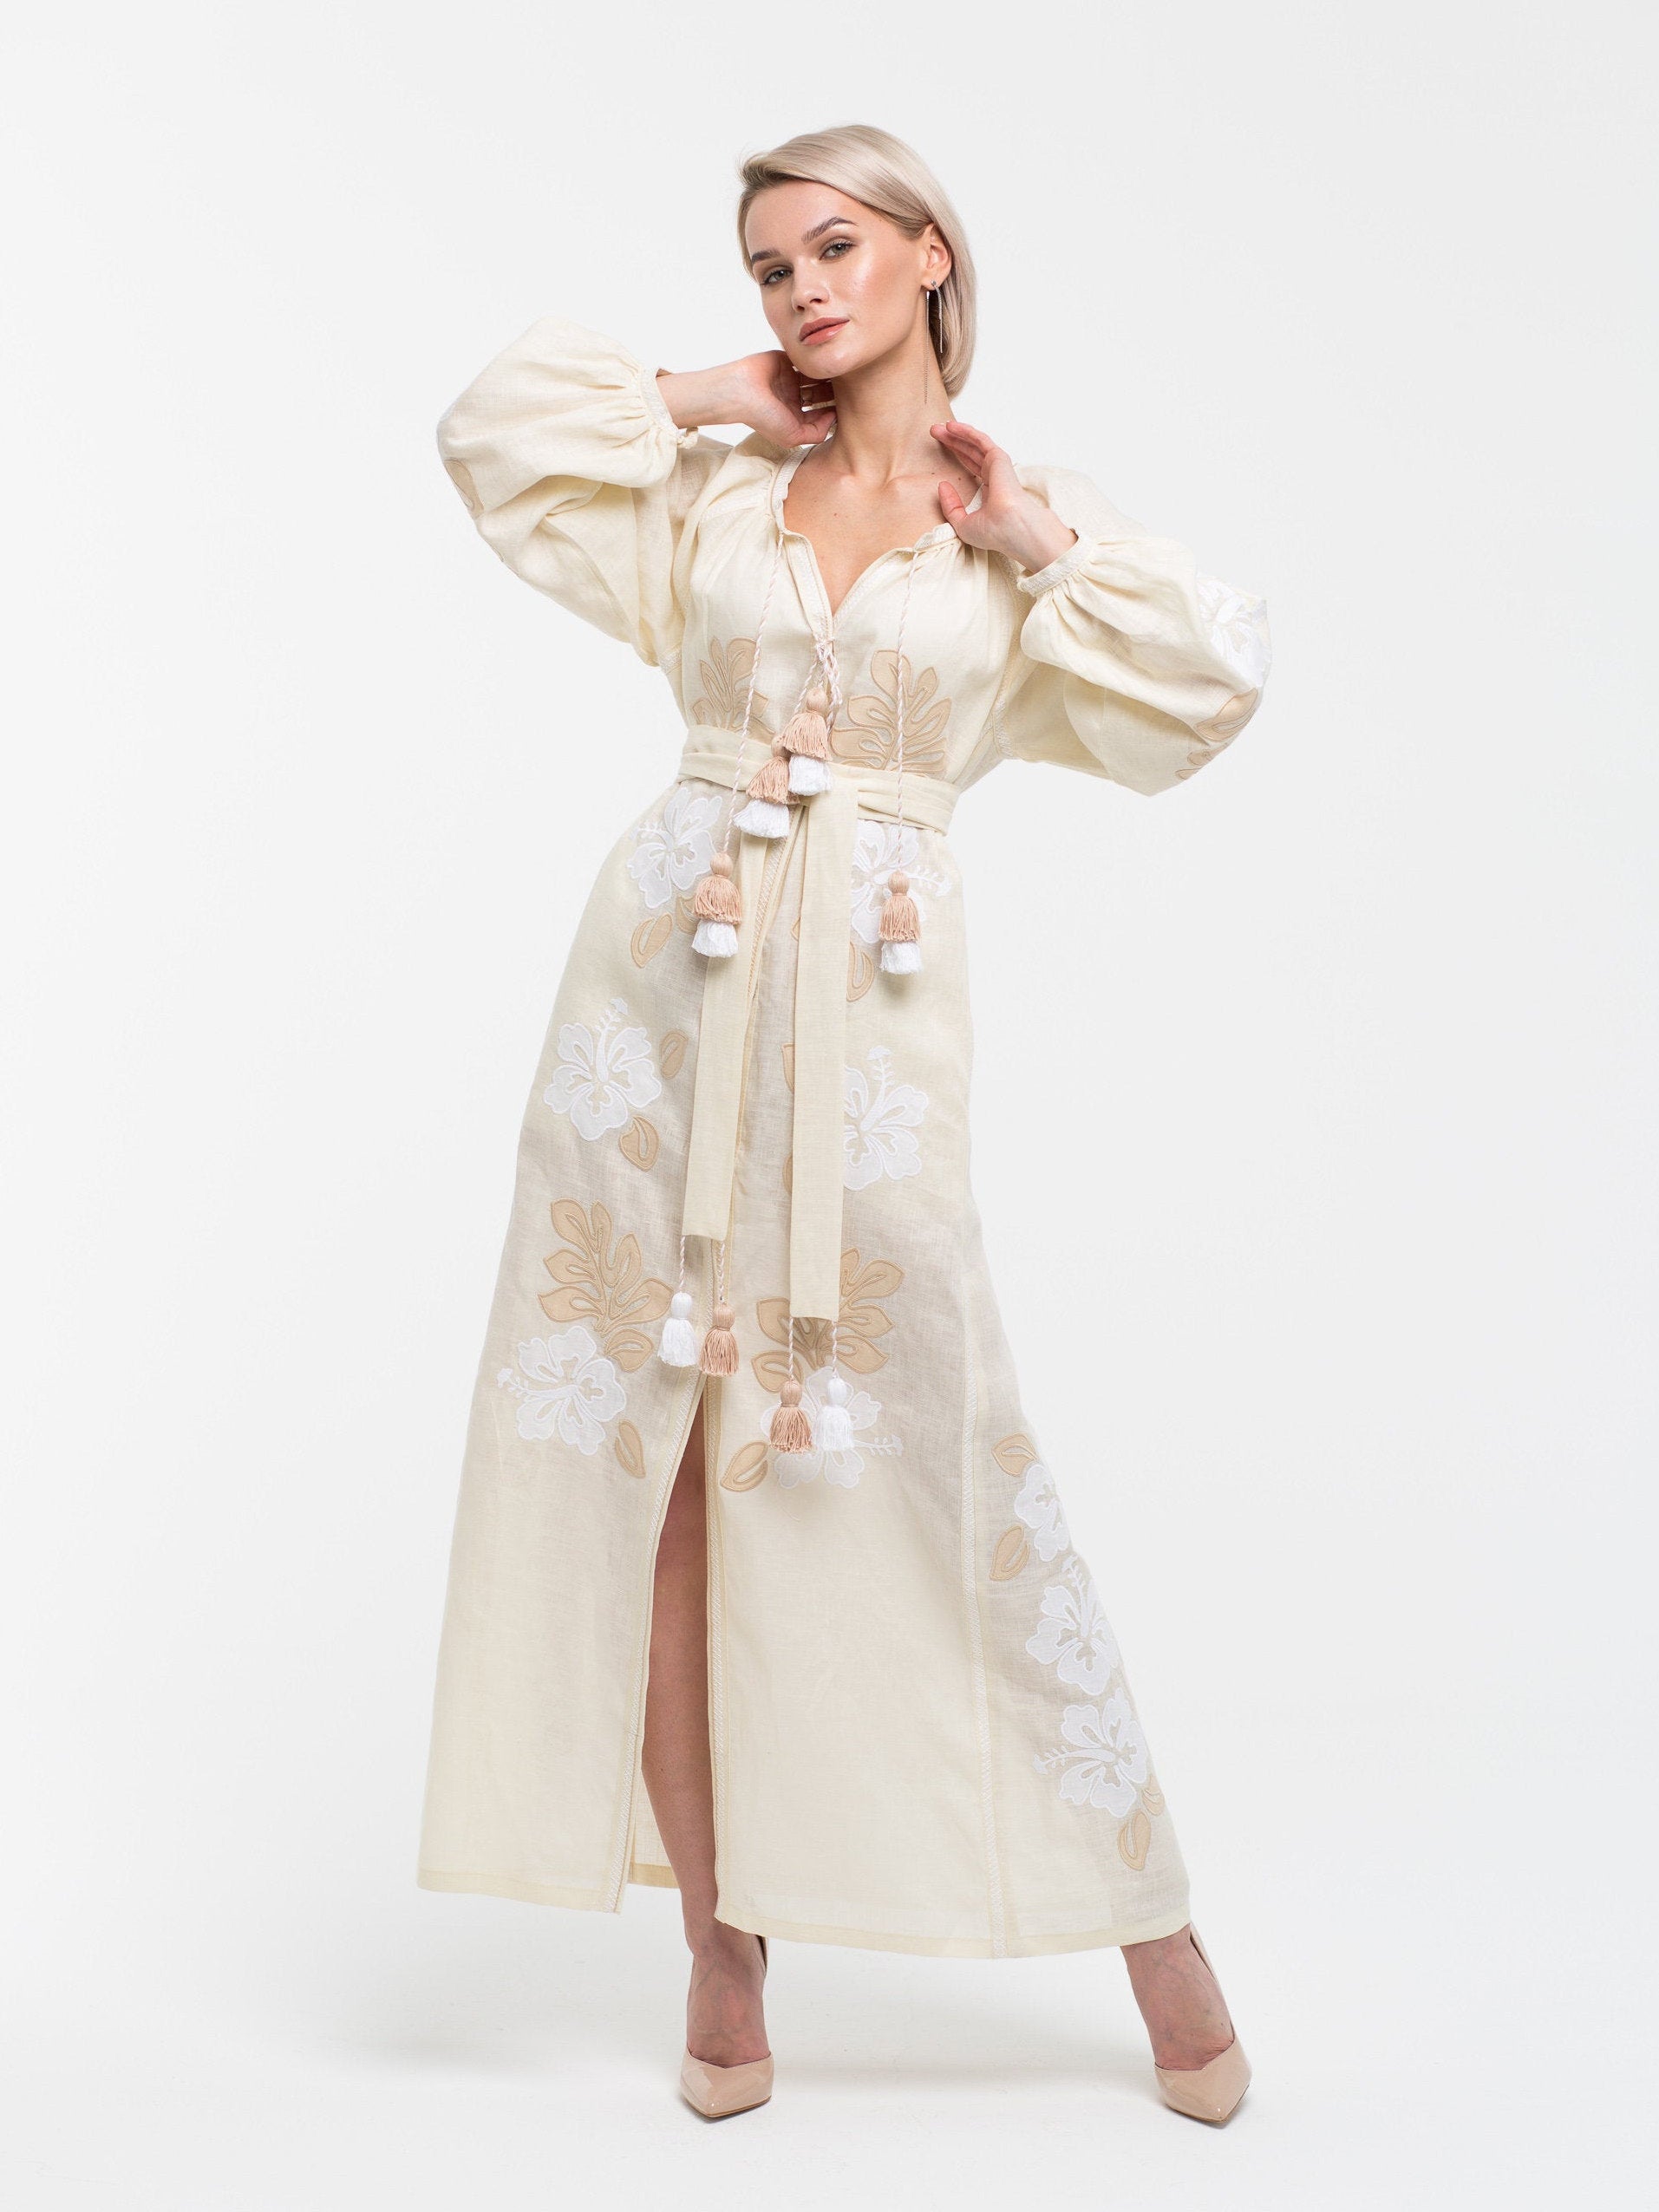 Ivory embroidered dress robe applique Kaftan plus size Fashion bohemian wedding gown Modern ethnic ukrainian dresses